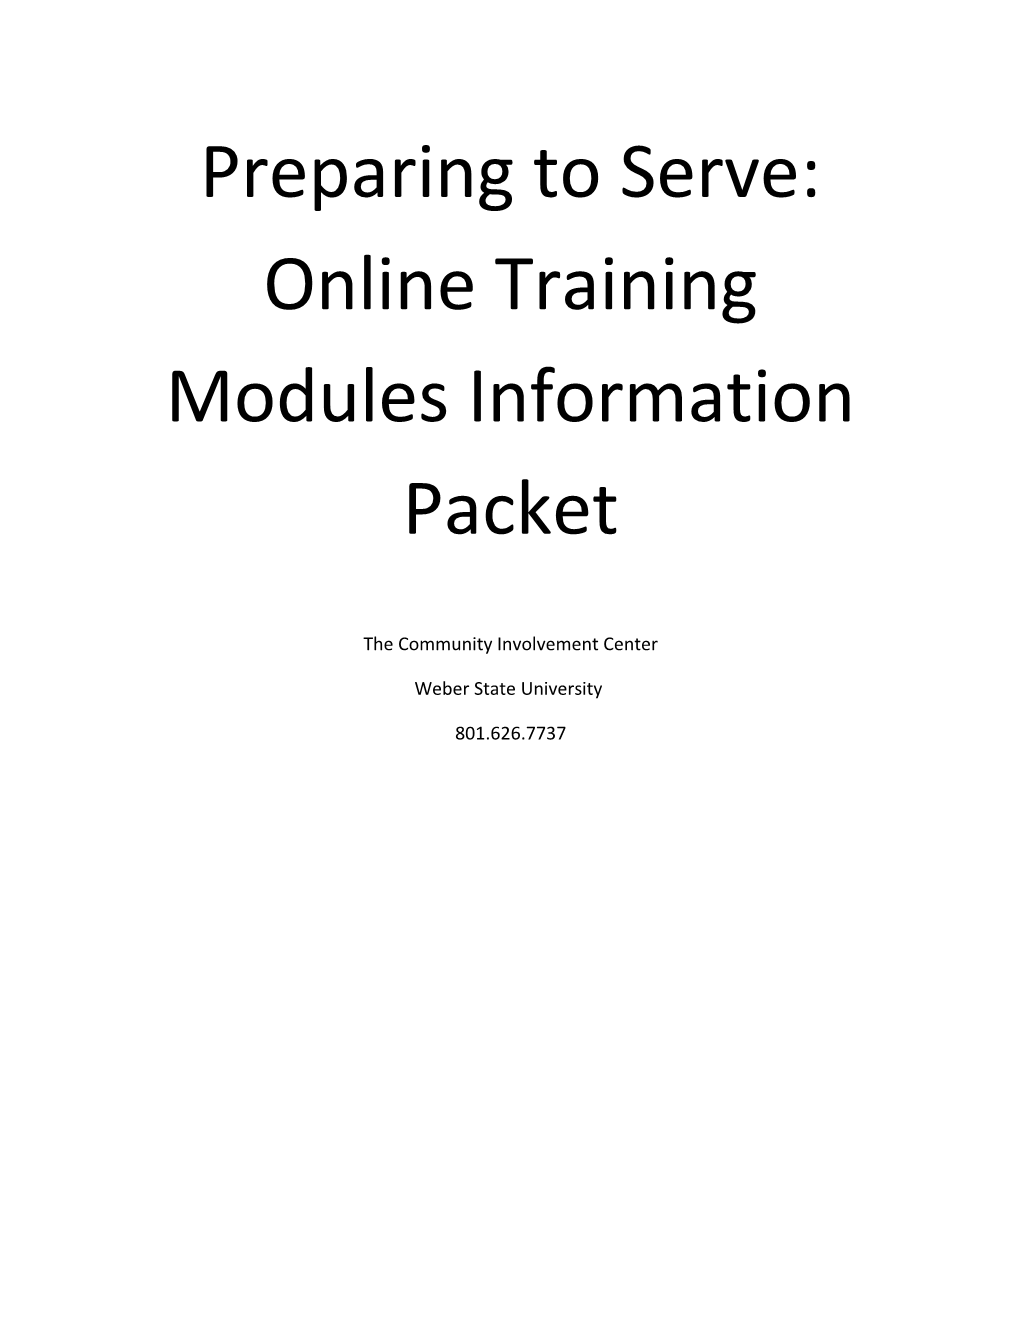 Preparing to Serve: Online Training Modules Information Packet